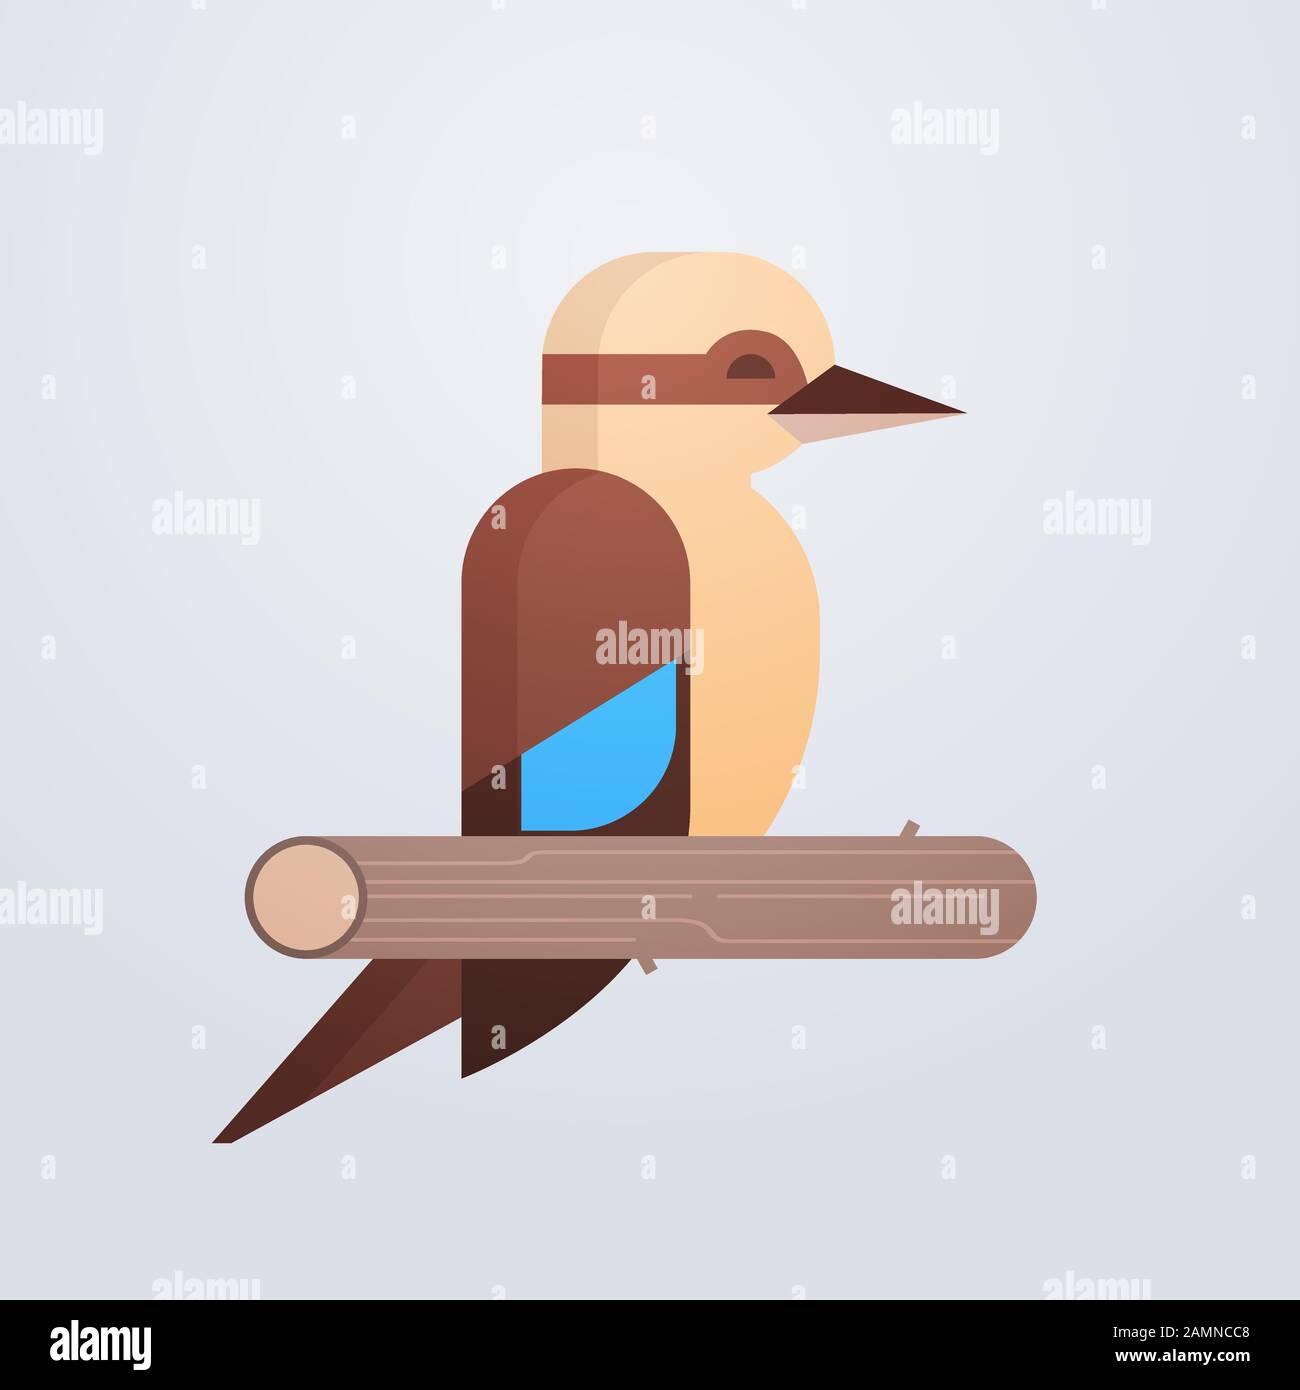 kookaburra bird icon cute cartoon wild animal symbol wildlife species fauna concept flat vector illustration Stock Vector